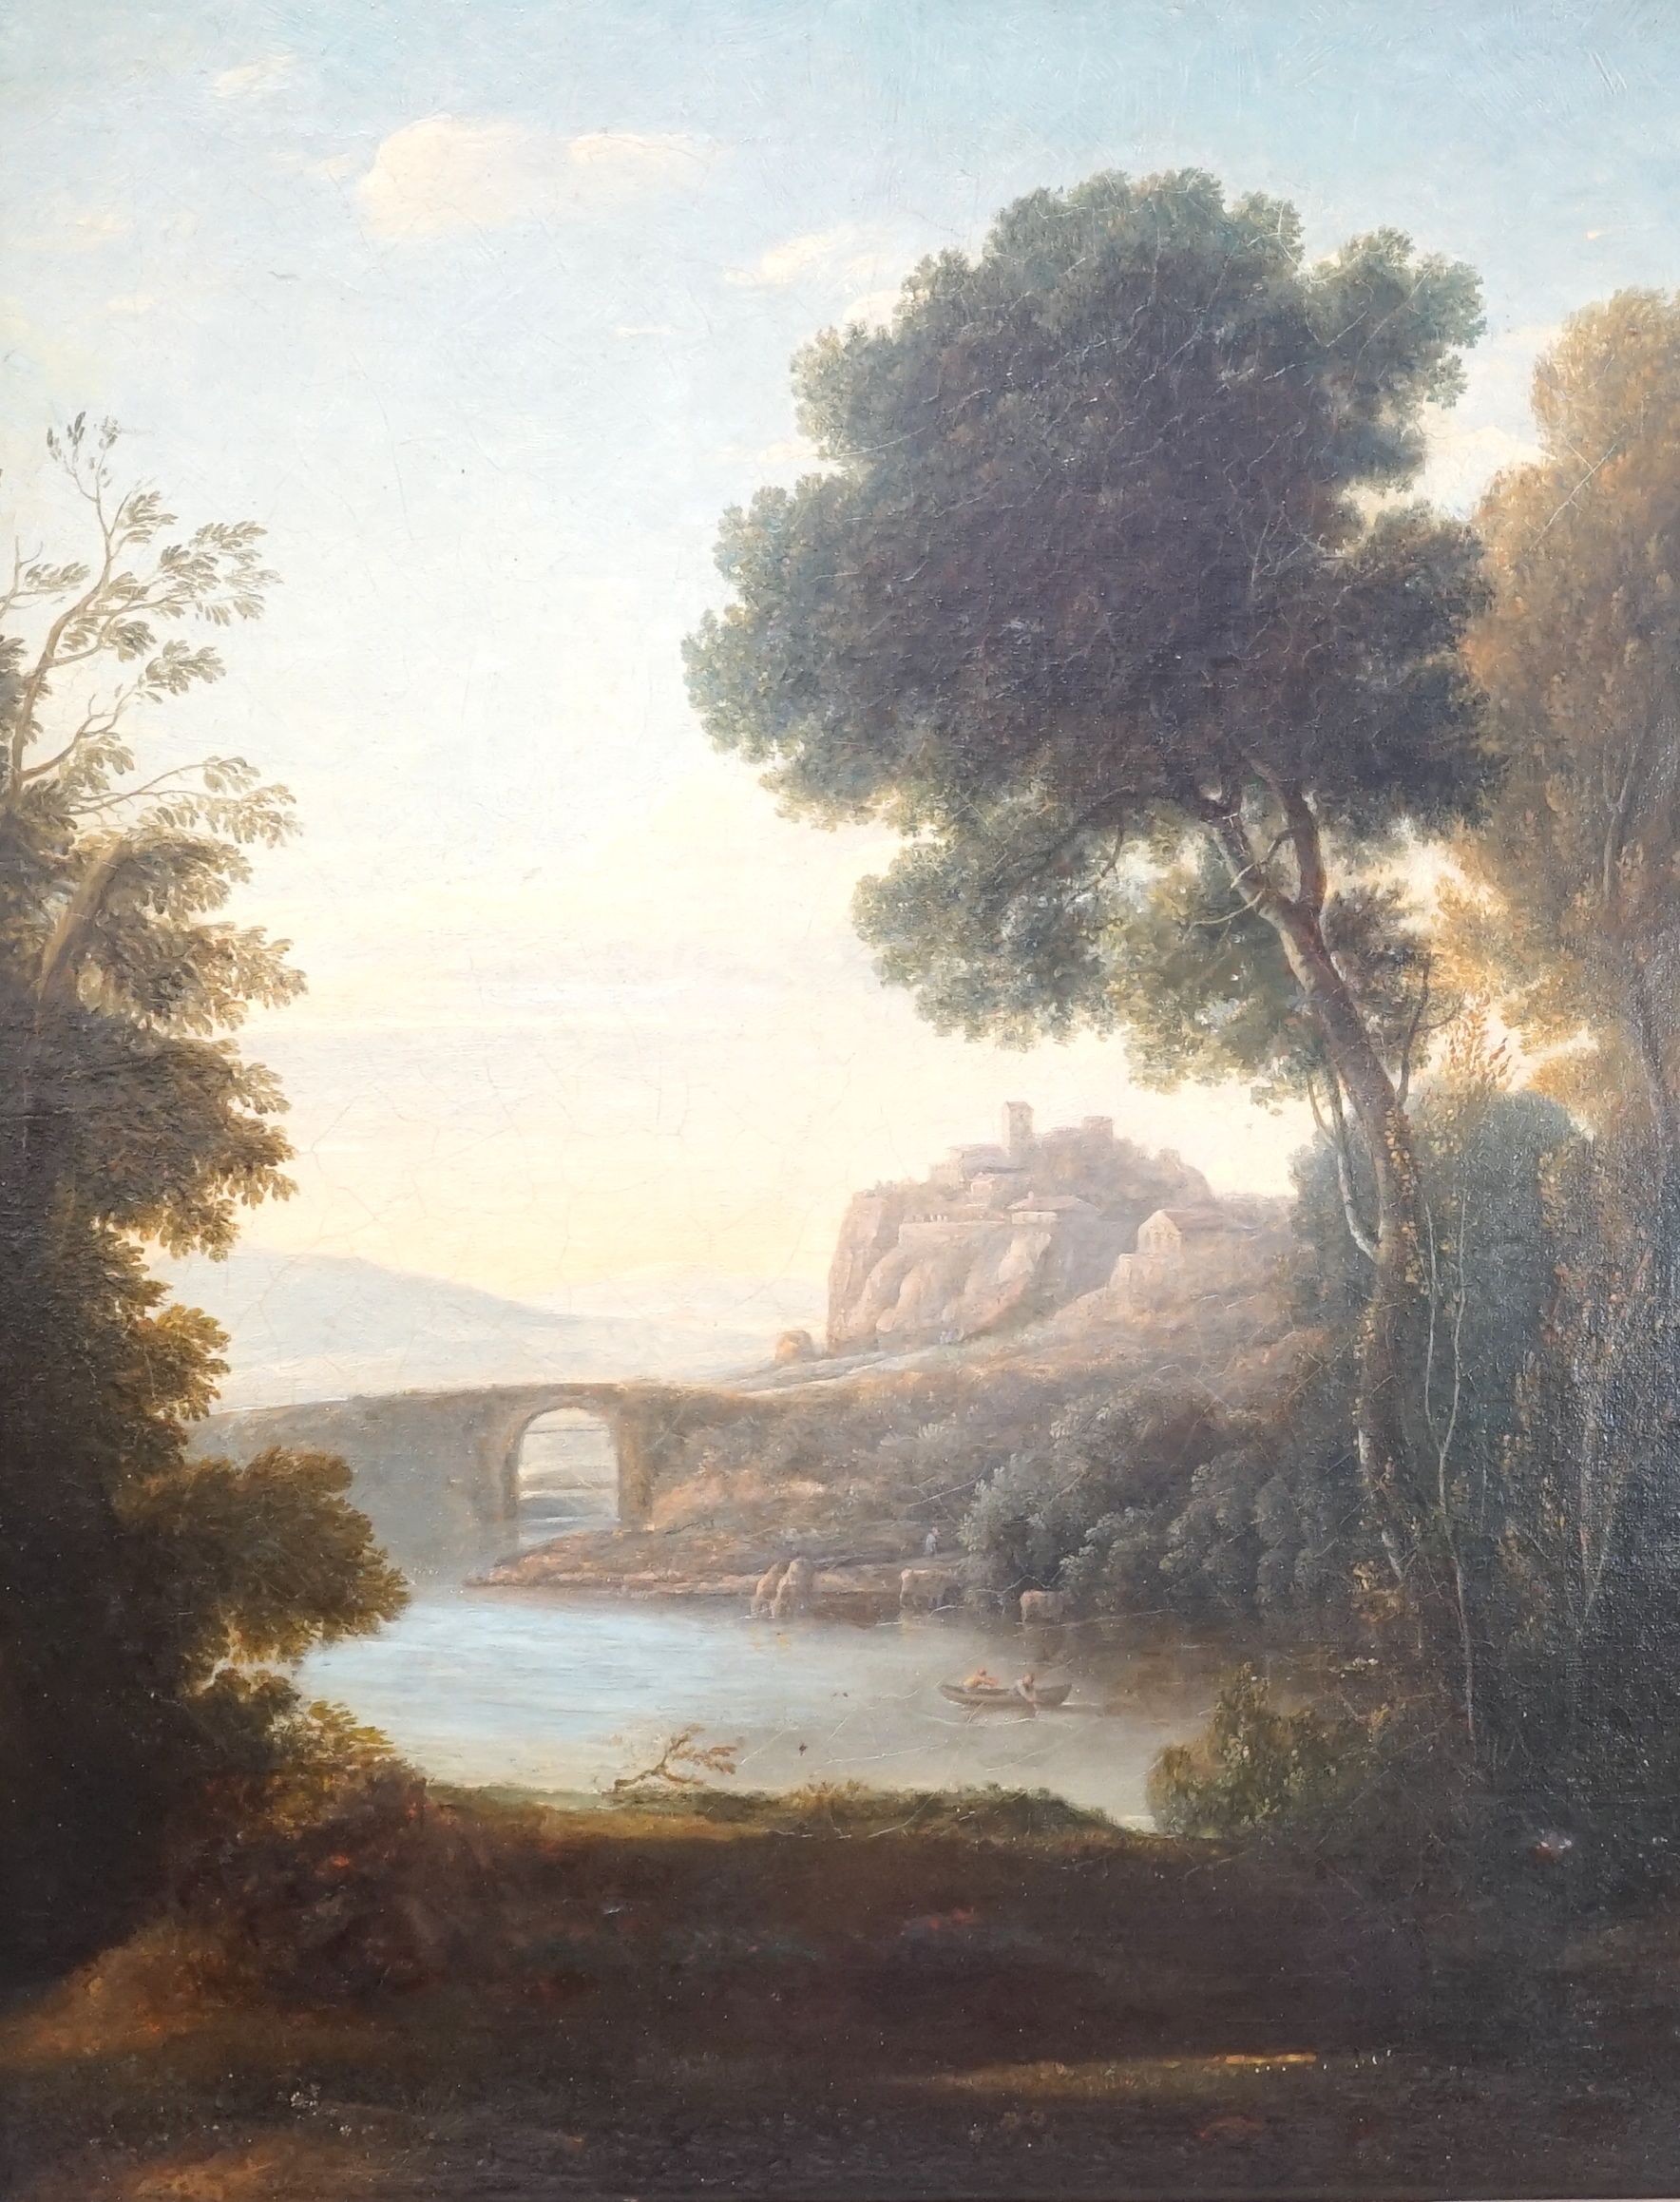 19th century English school, oil on canvas, Italian landscape, 52 cm X 44 cm